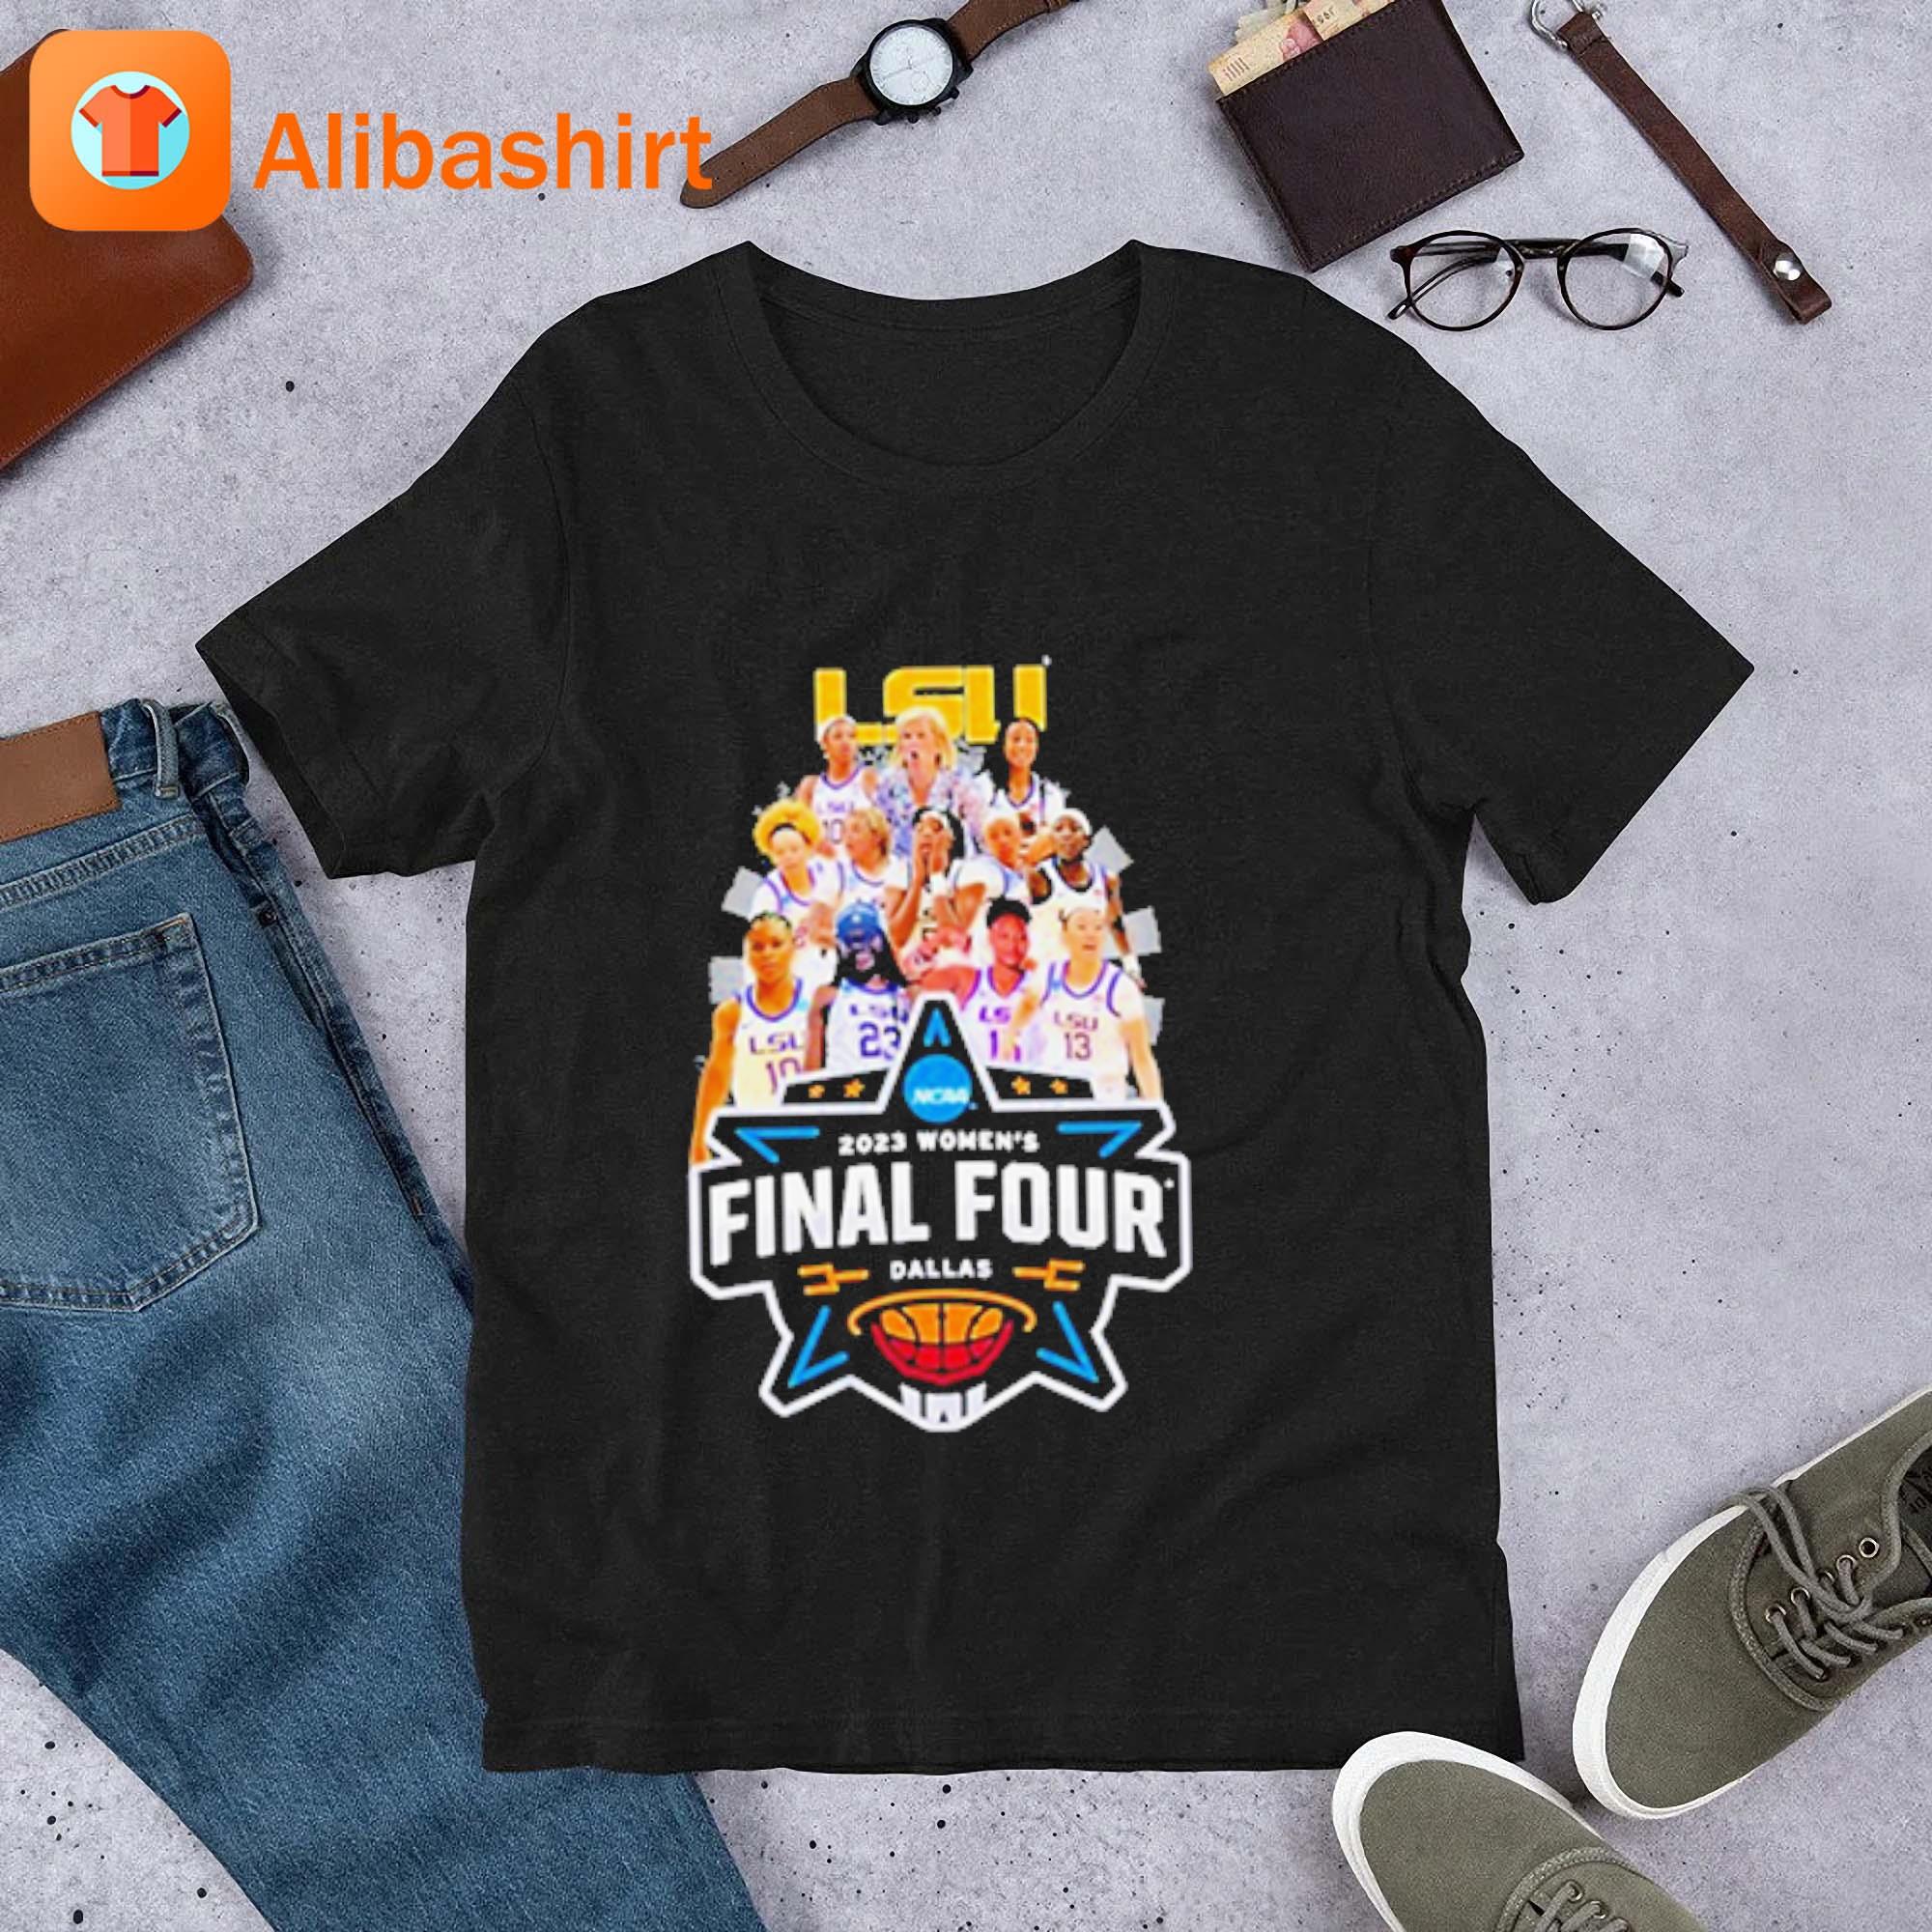 LSU Women's Basketball Final Four Shirt